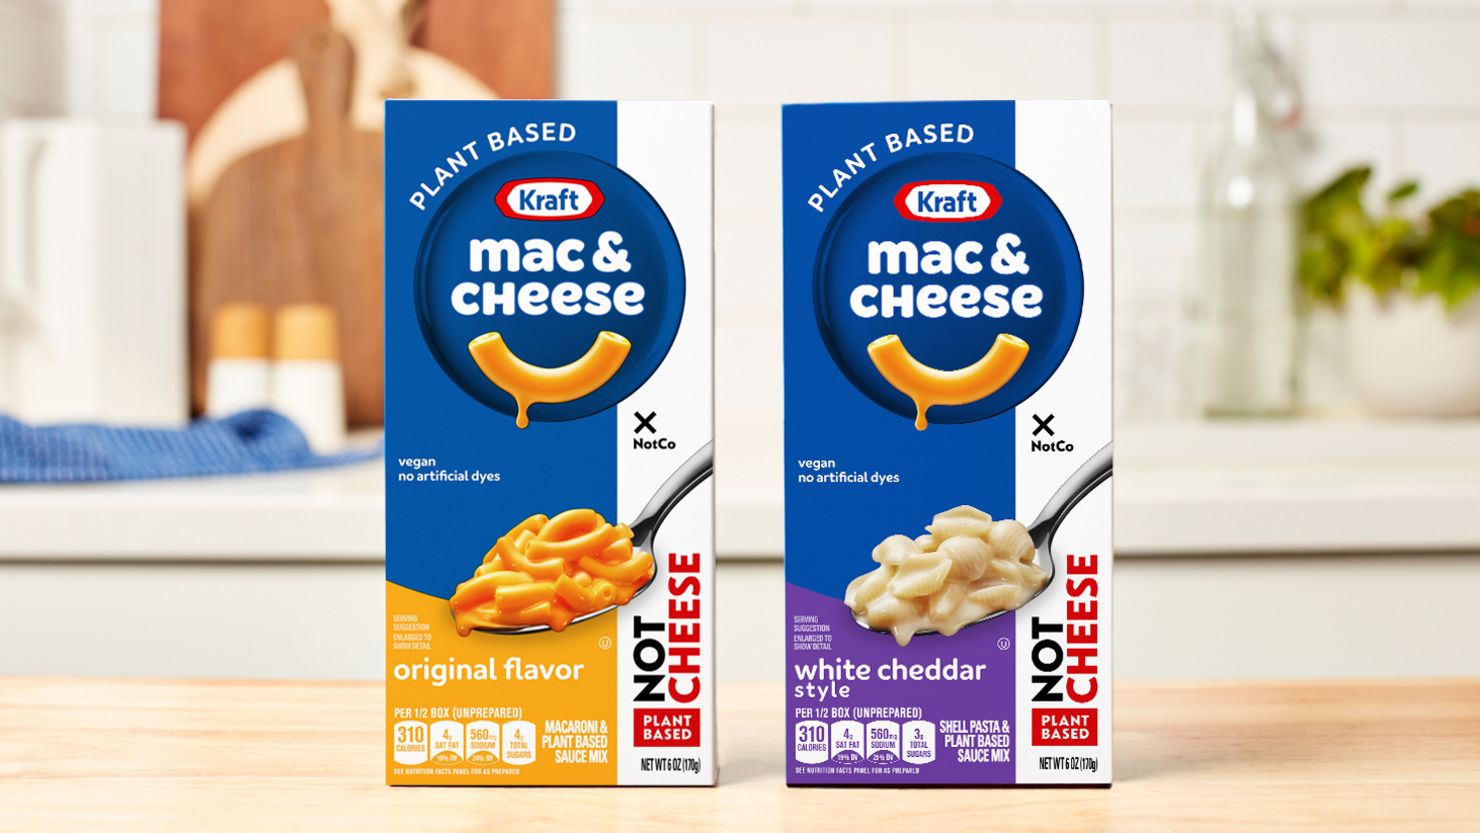 Who Eats the Most Kraft Mac & Cheese?